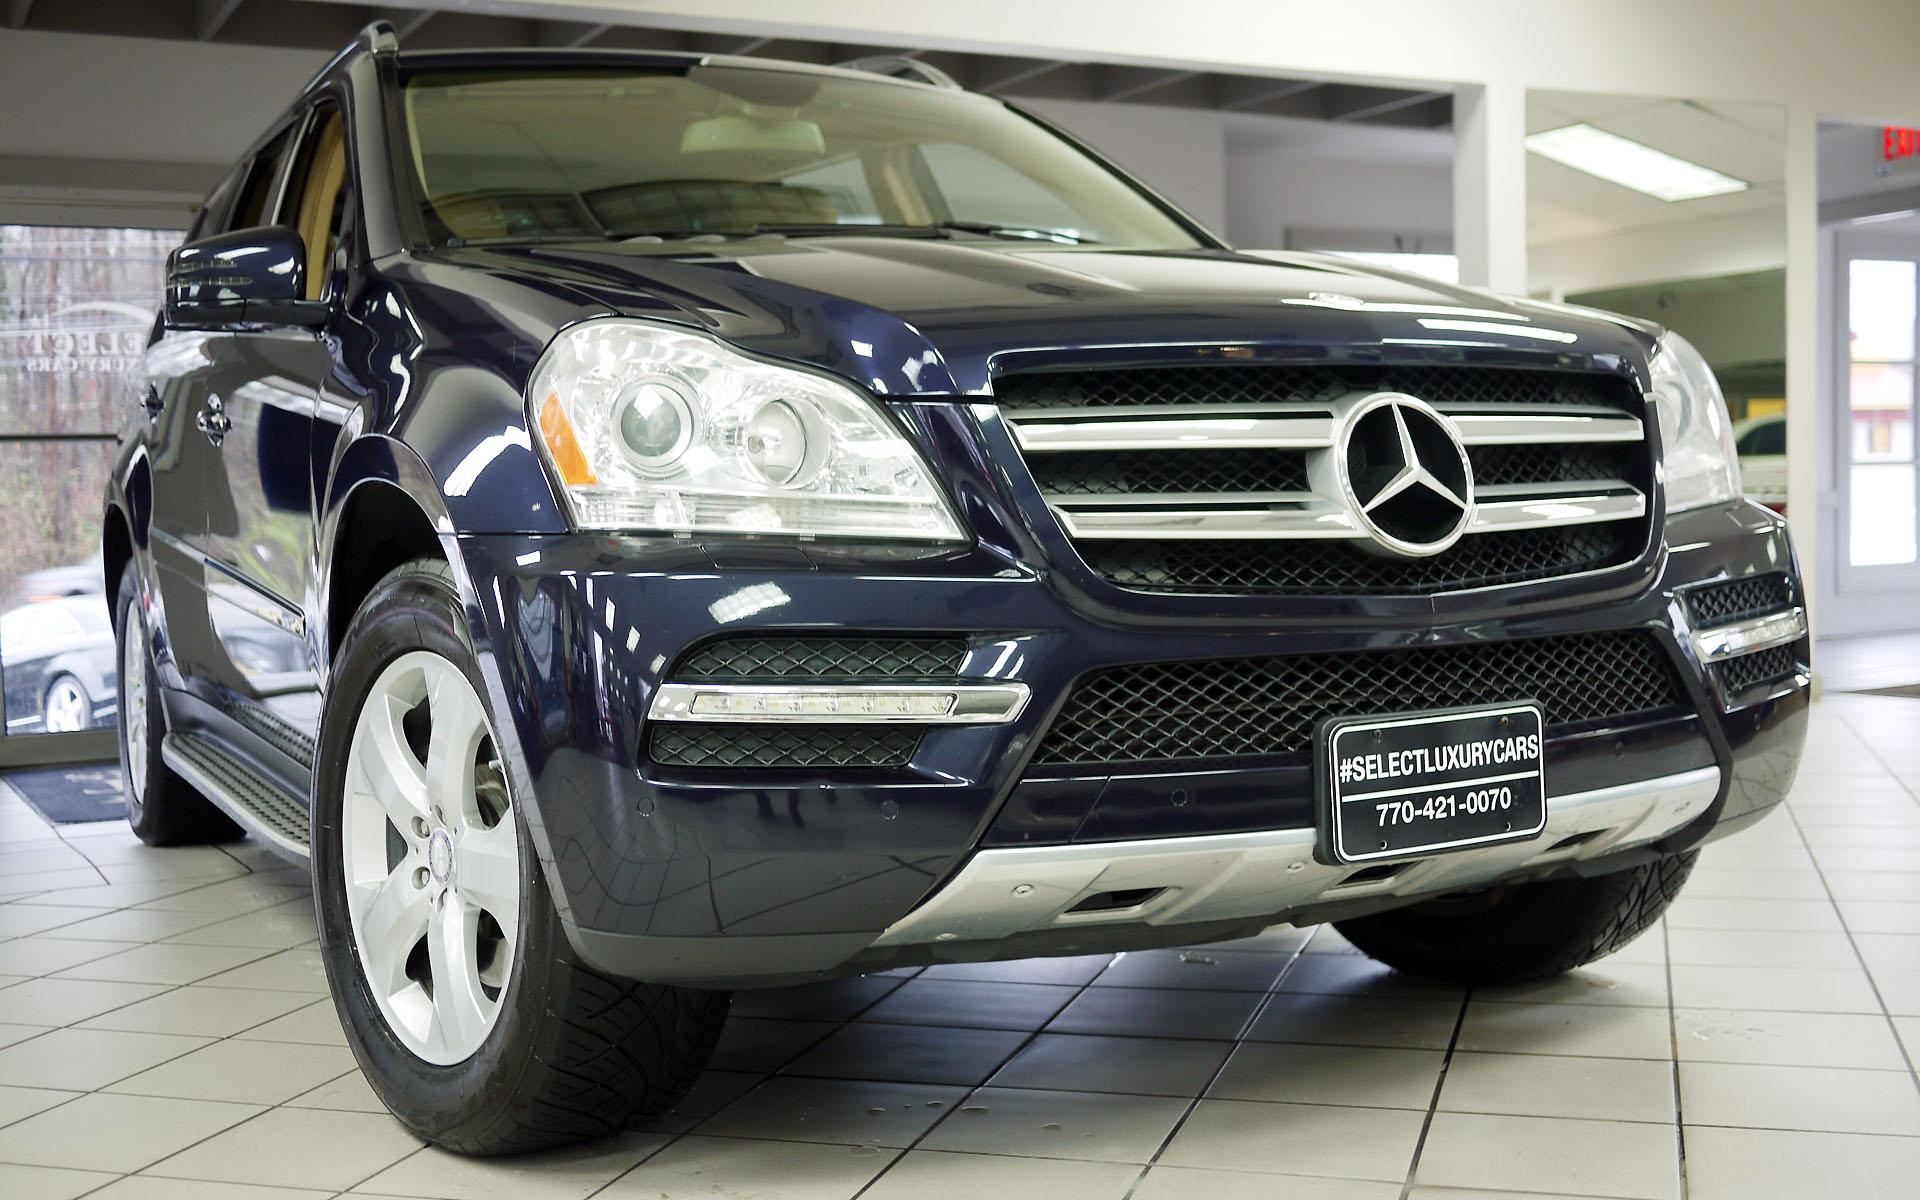 2012 Mercedes c230 lease #7